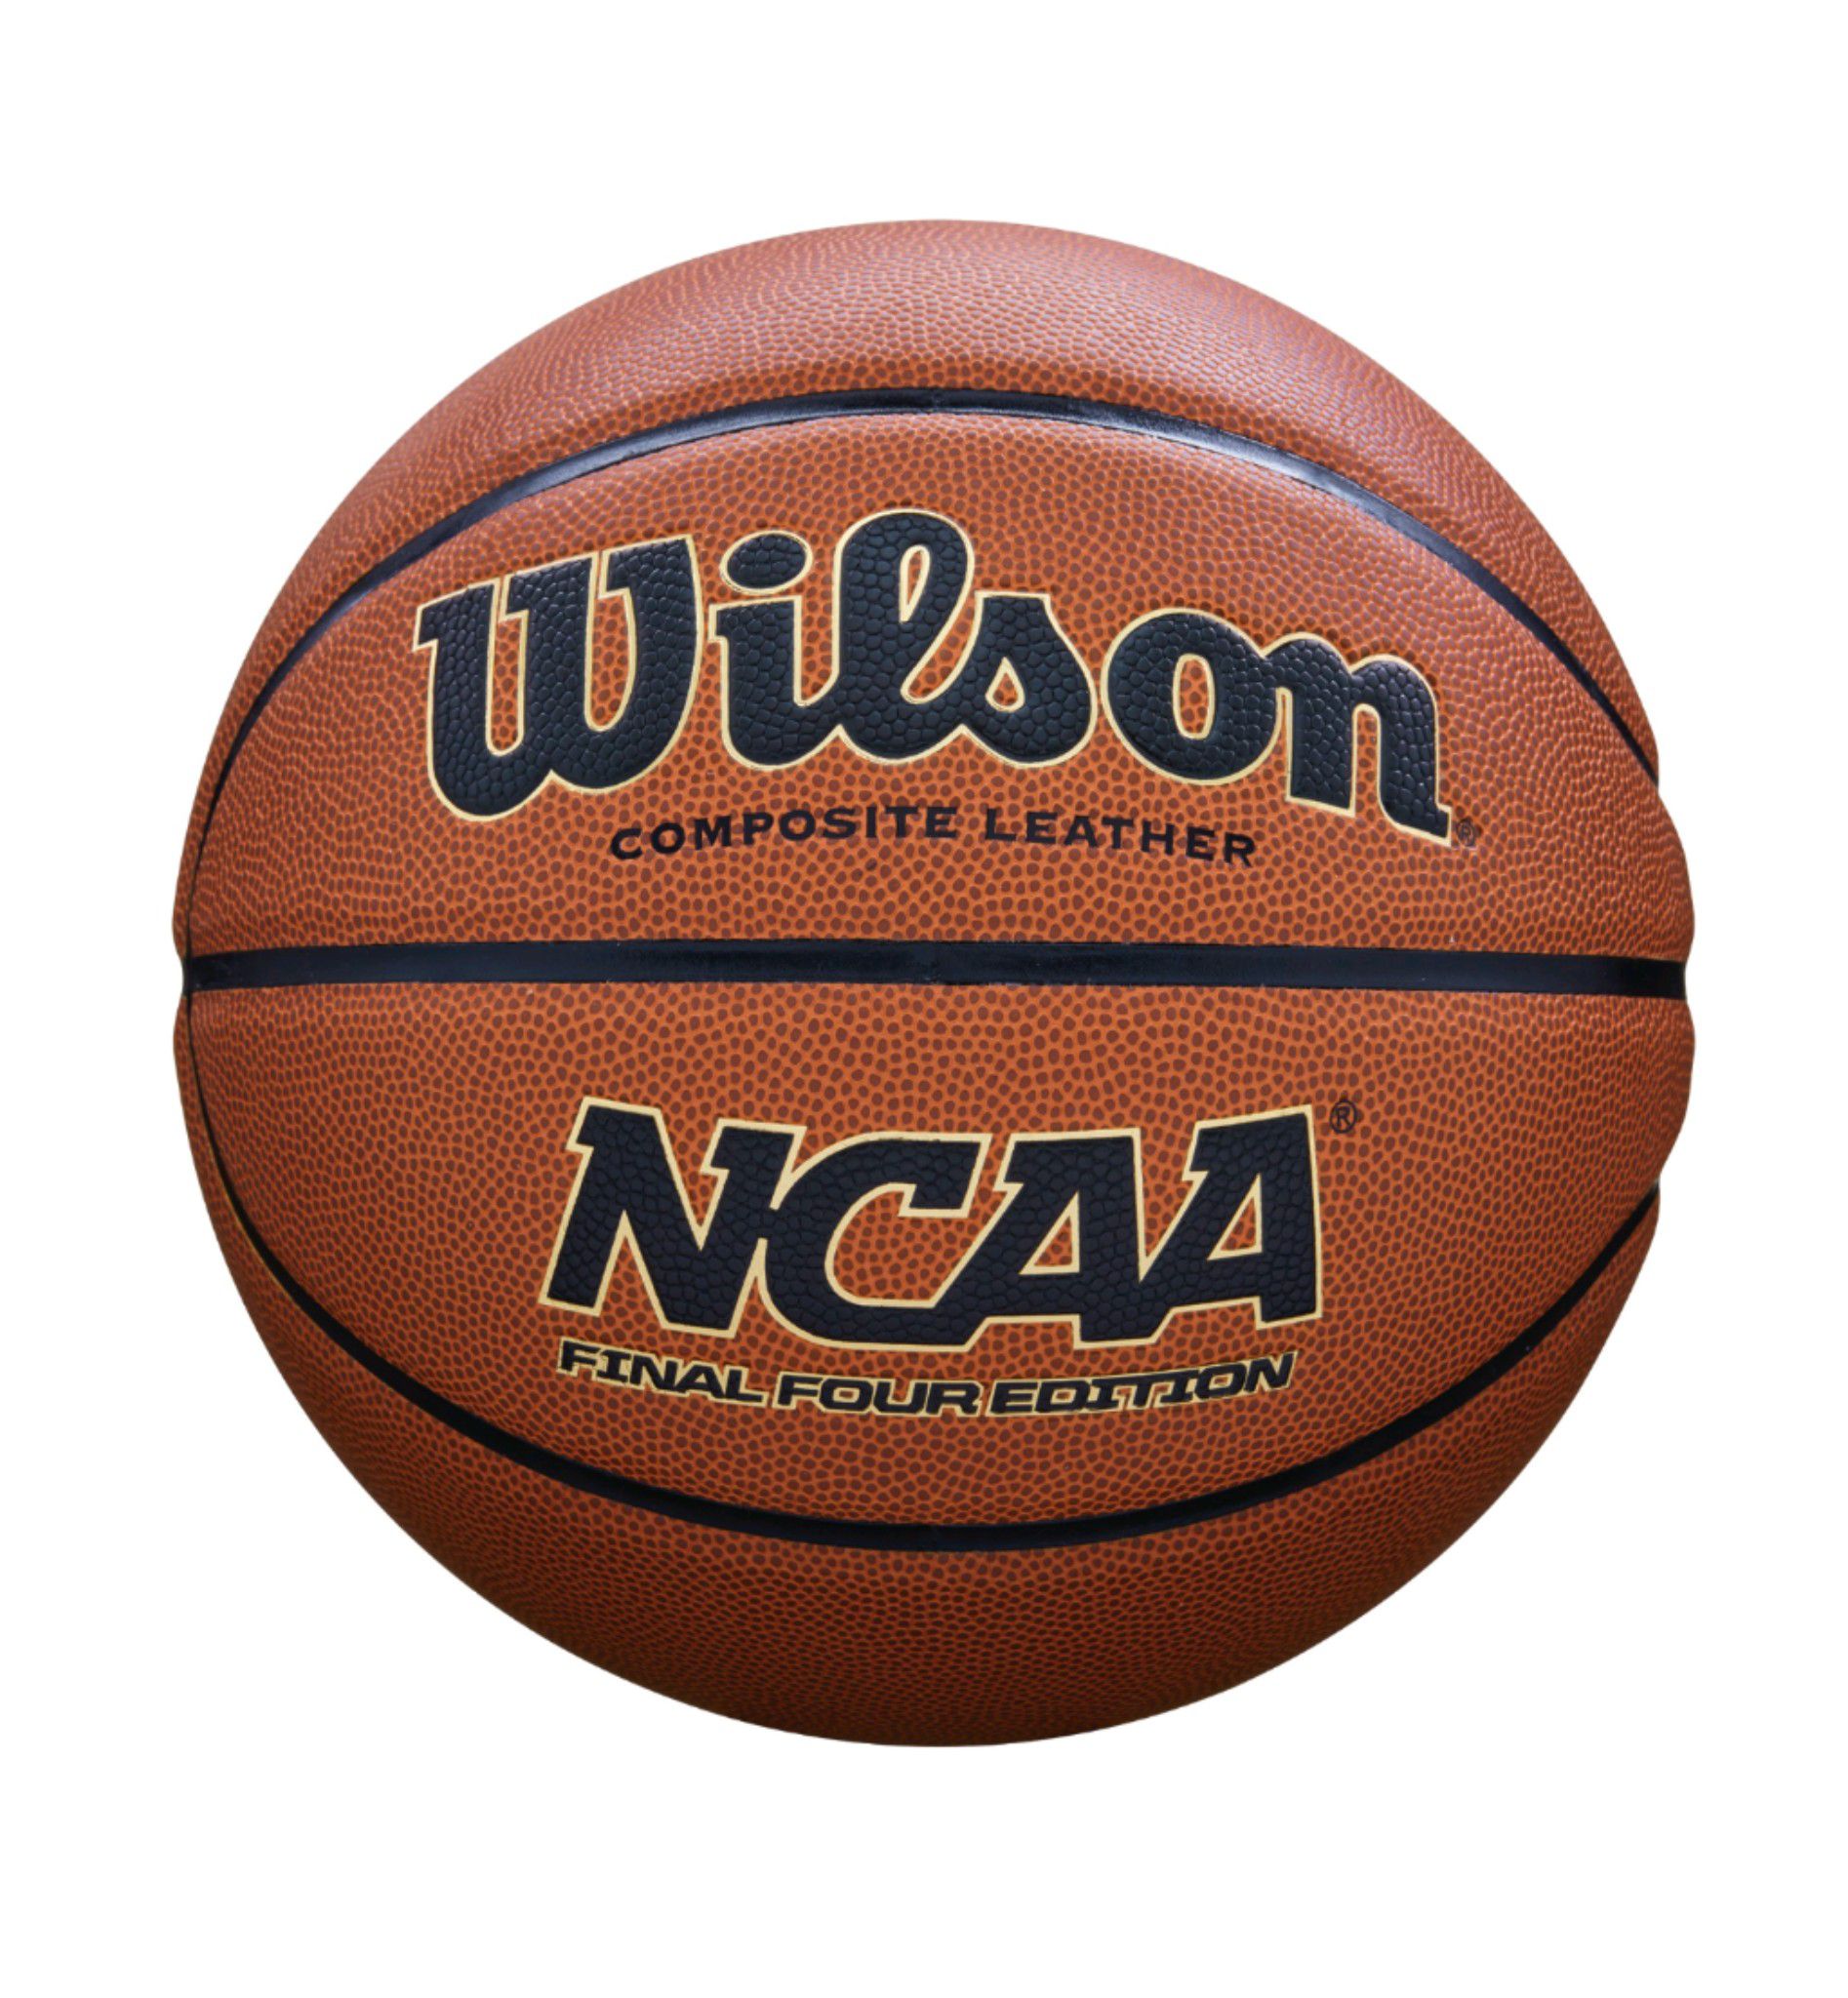 Wilson ncaa final four edition basketball hoops sports